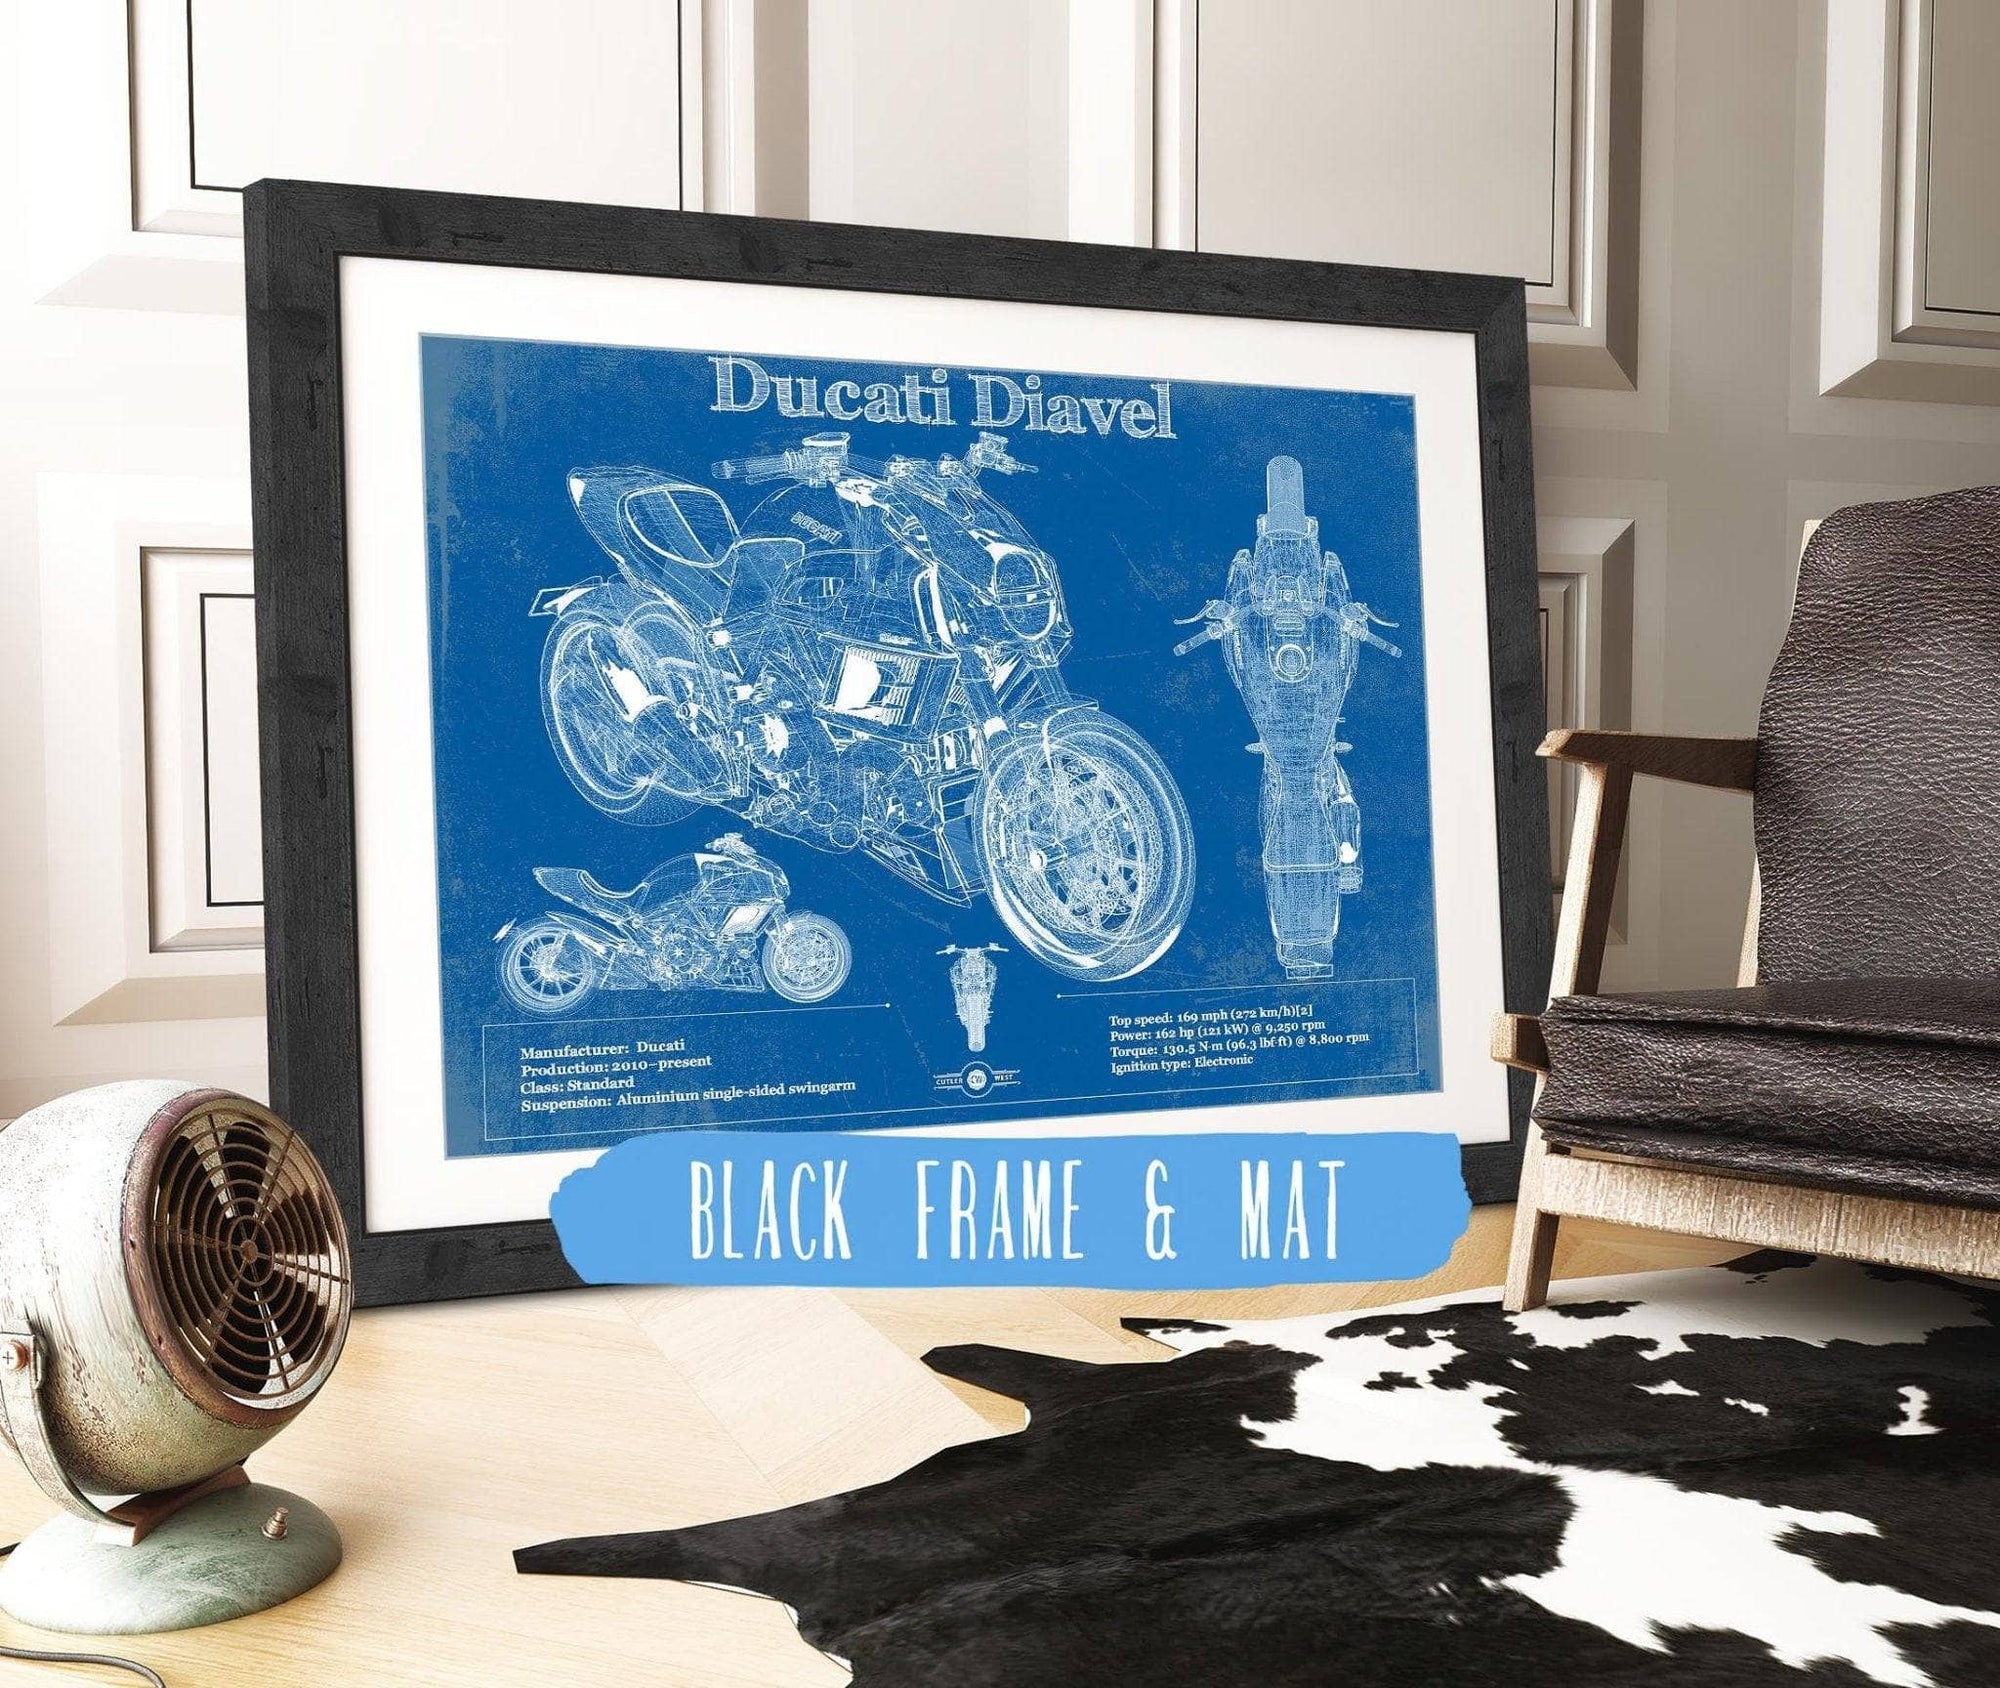 Cutler West 14" x 11" / Black Frame & Mat Ducati Diavel Blueprint Motorcycle Patent Print 845000332_61543